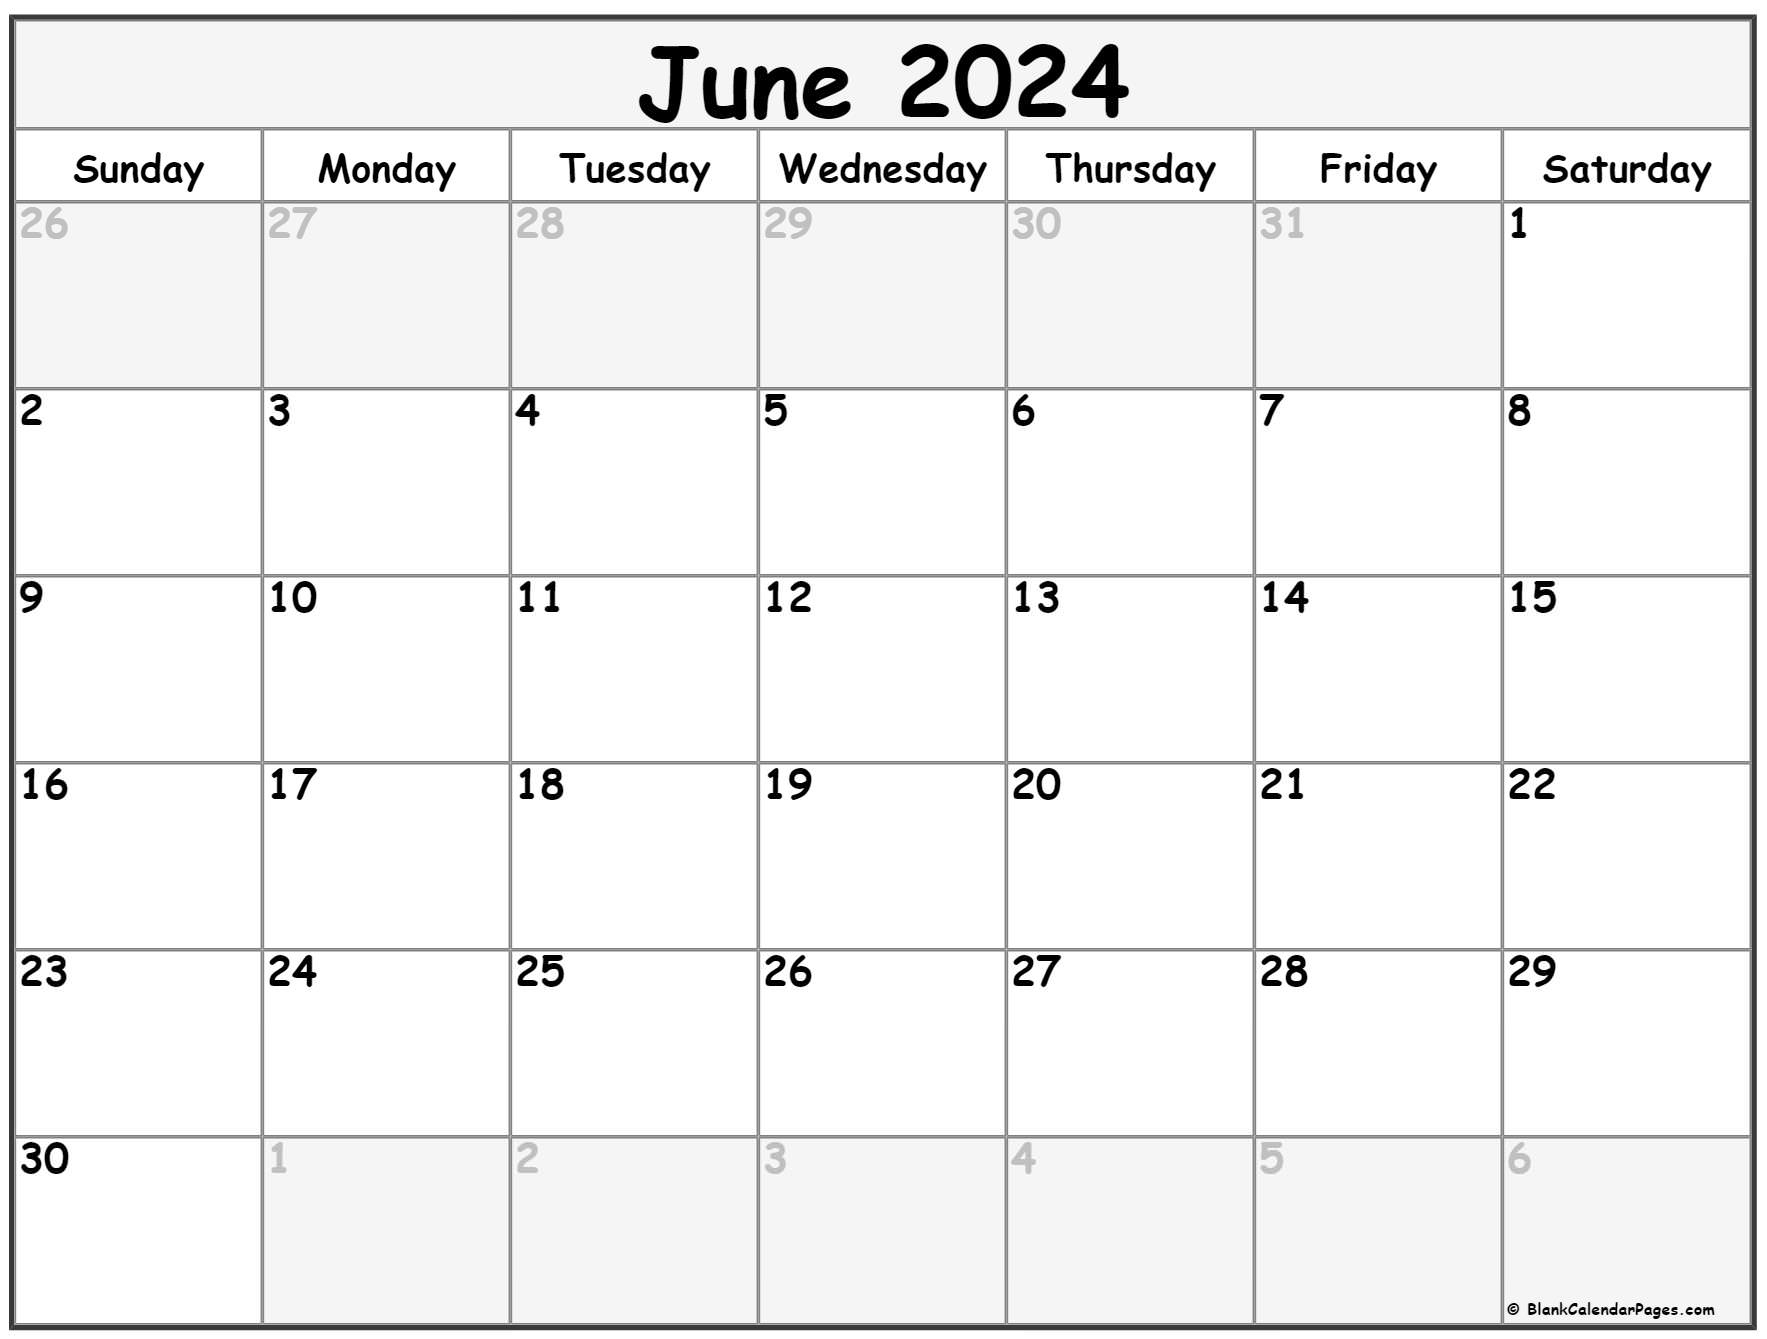 June 2024 Calendar | Free Printable Calendar | Printable Calendar 2024 June